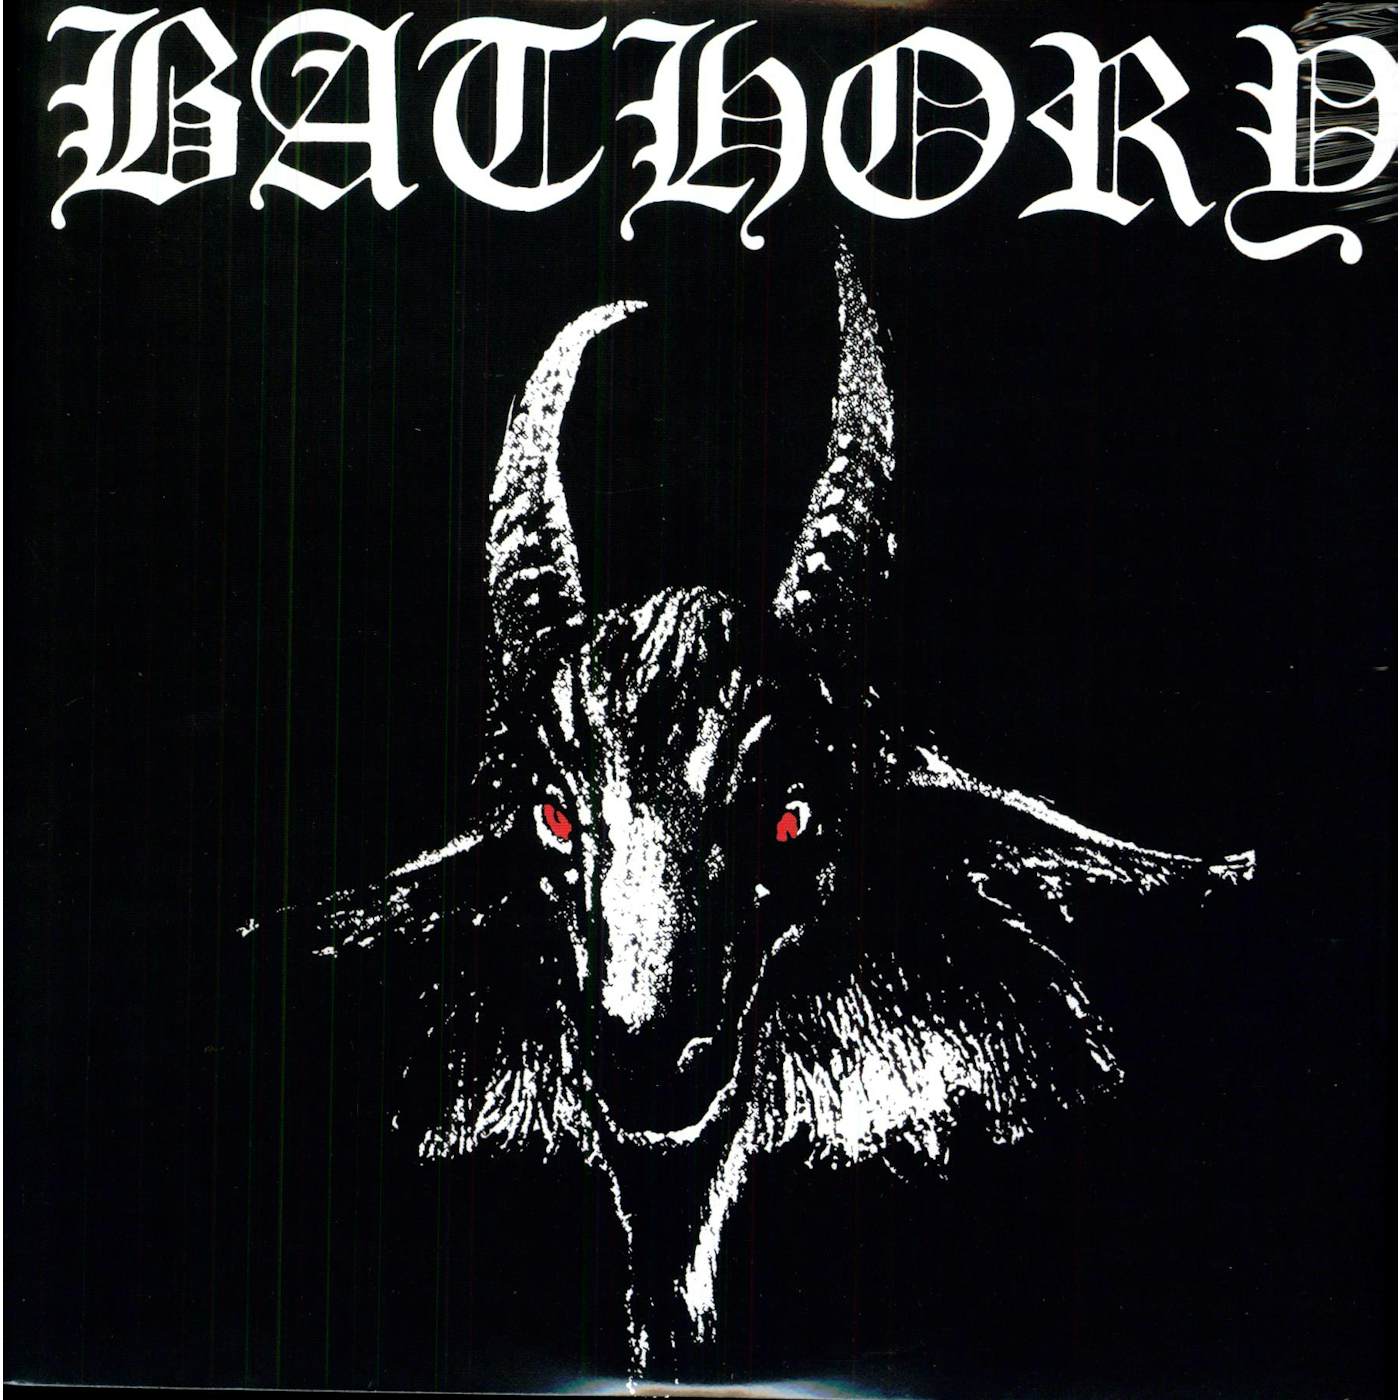 Bathory Vinyl Record